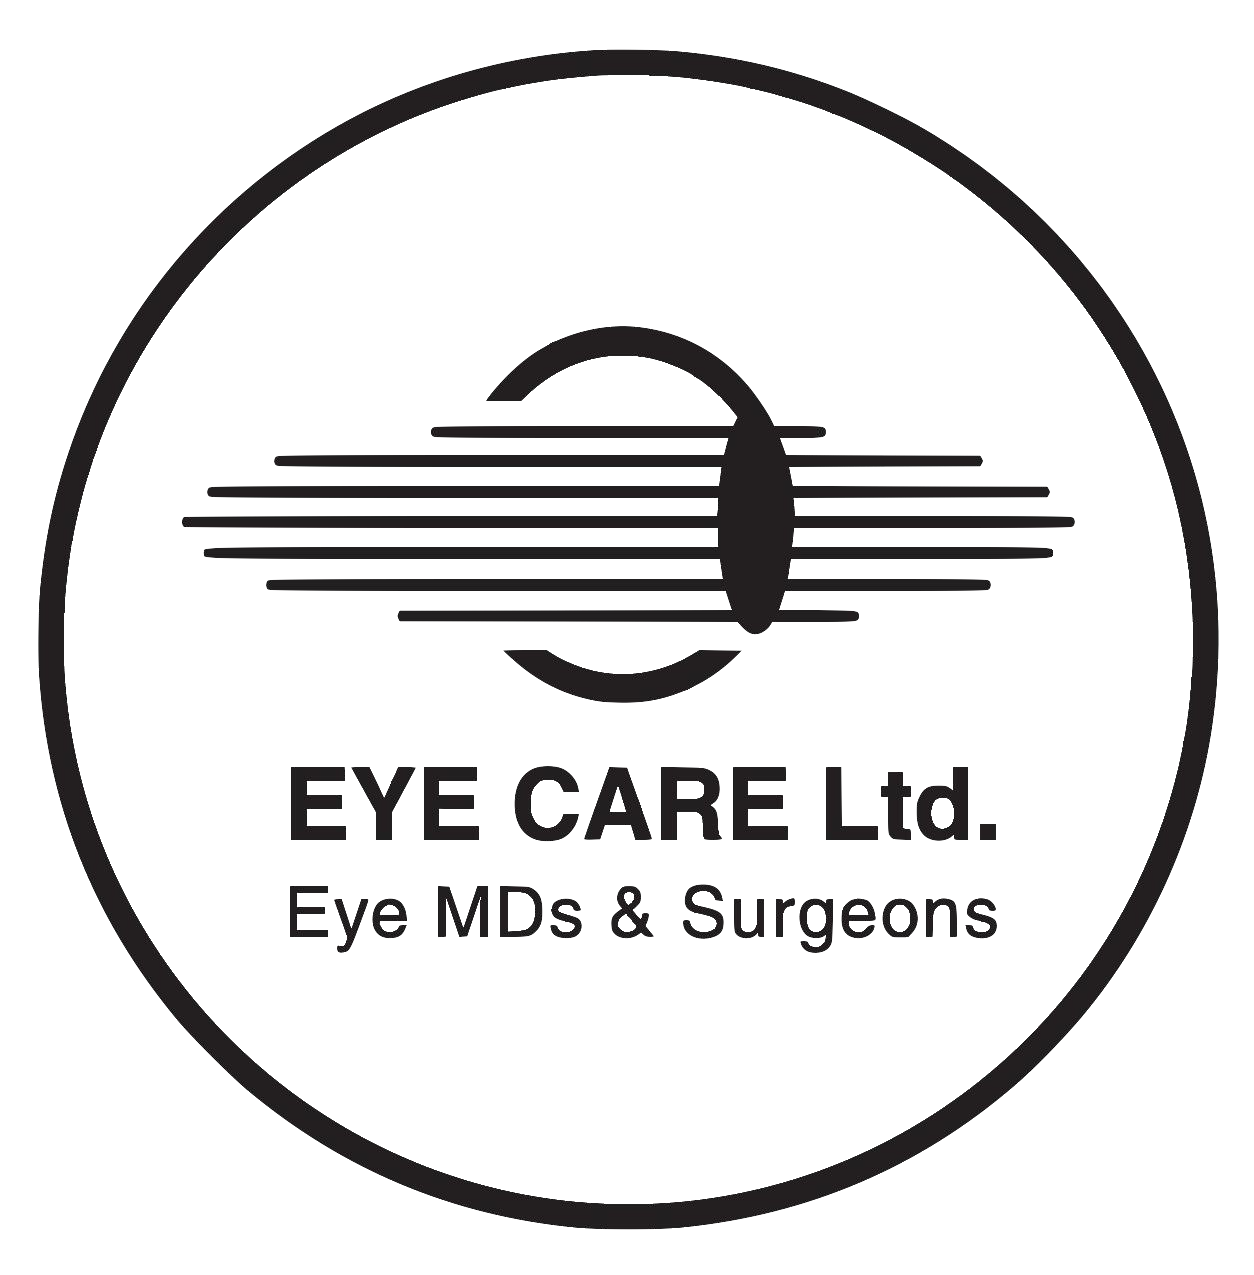 Latest news from Eye Care Ltd - Eye Care image